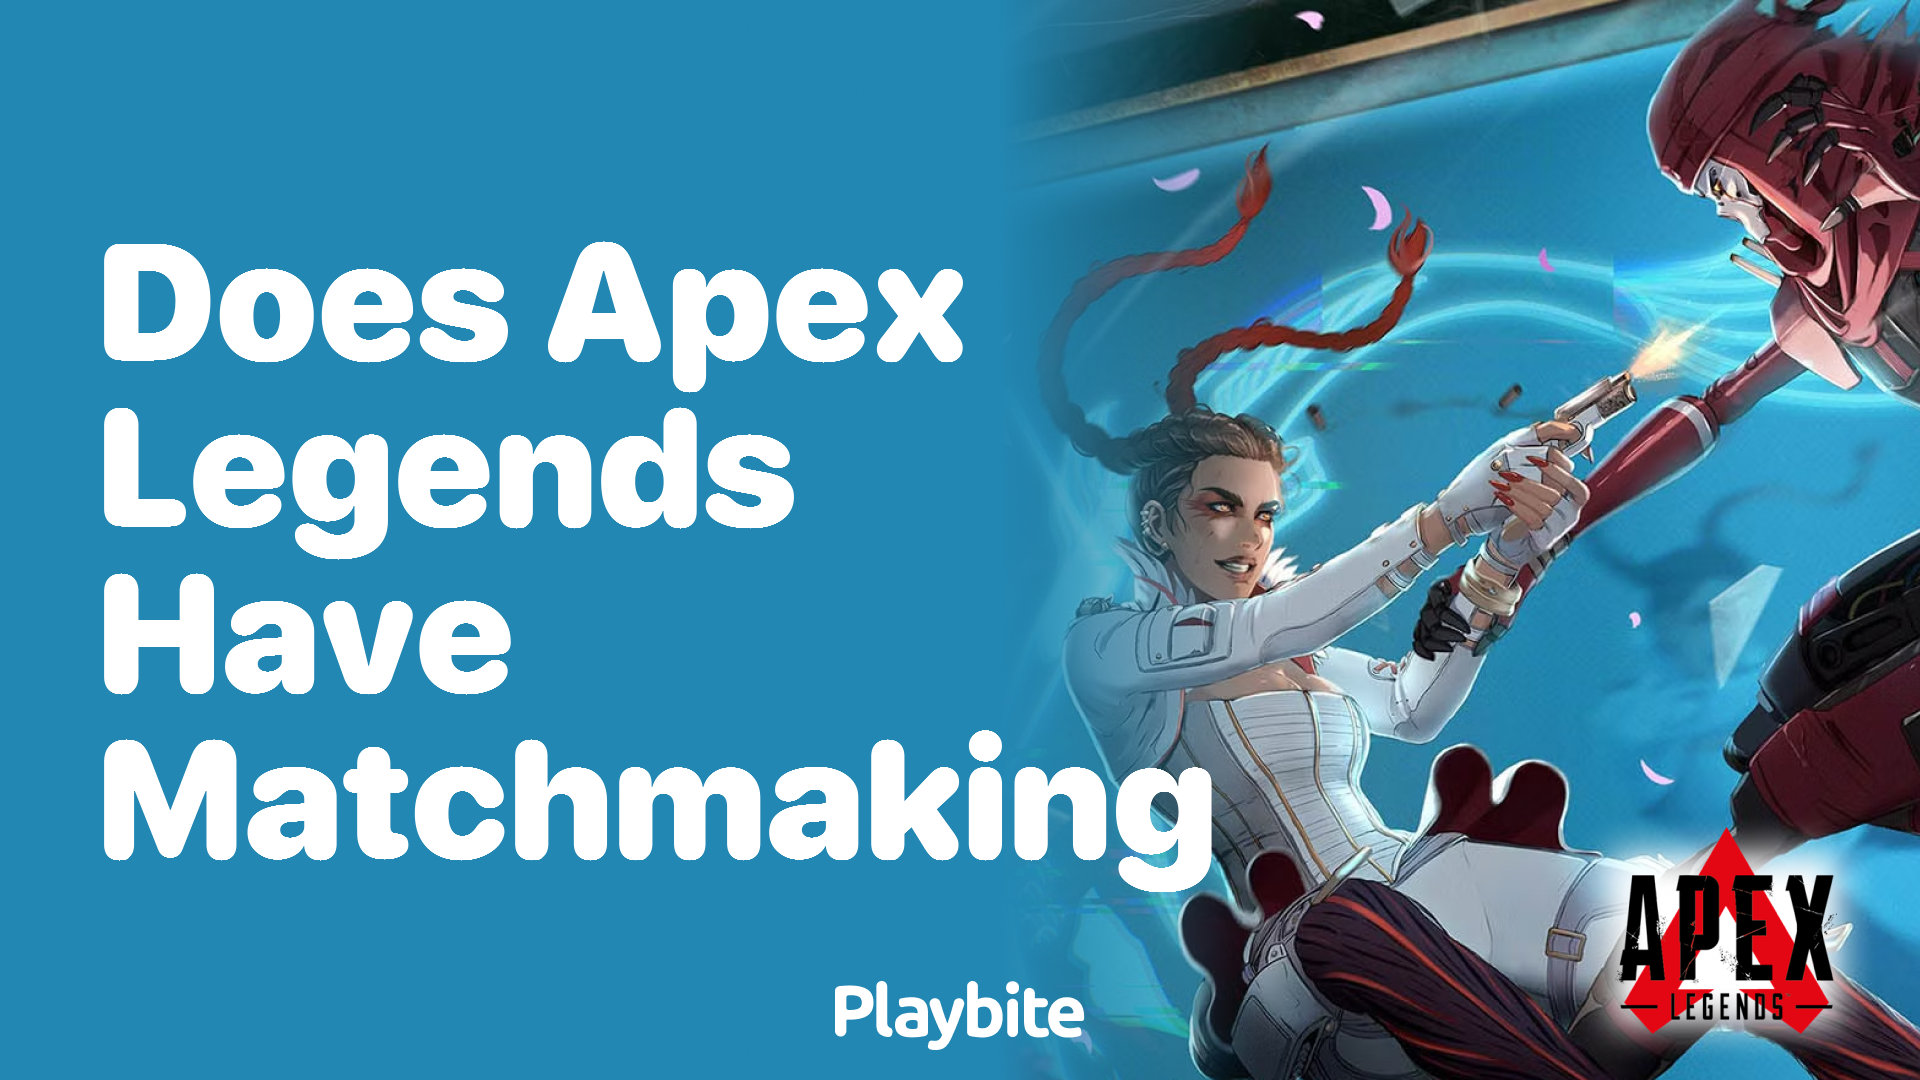 Does Apex Legends have matchmaking?